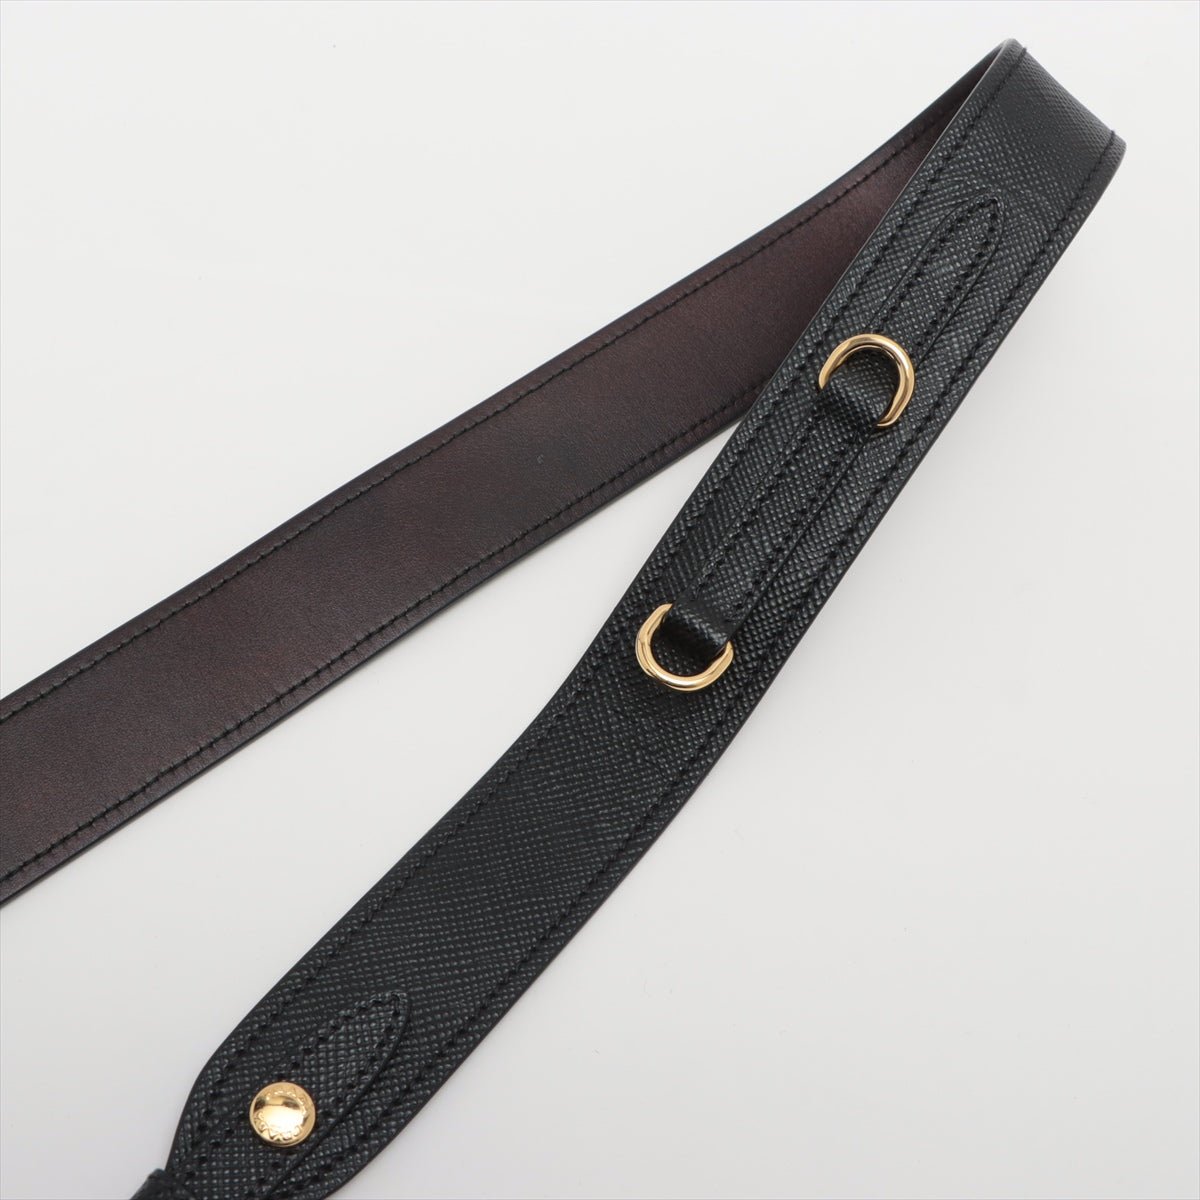 Second hand Prada Monochrome Small Saffiano Leather Black Bag - Tabita Bags